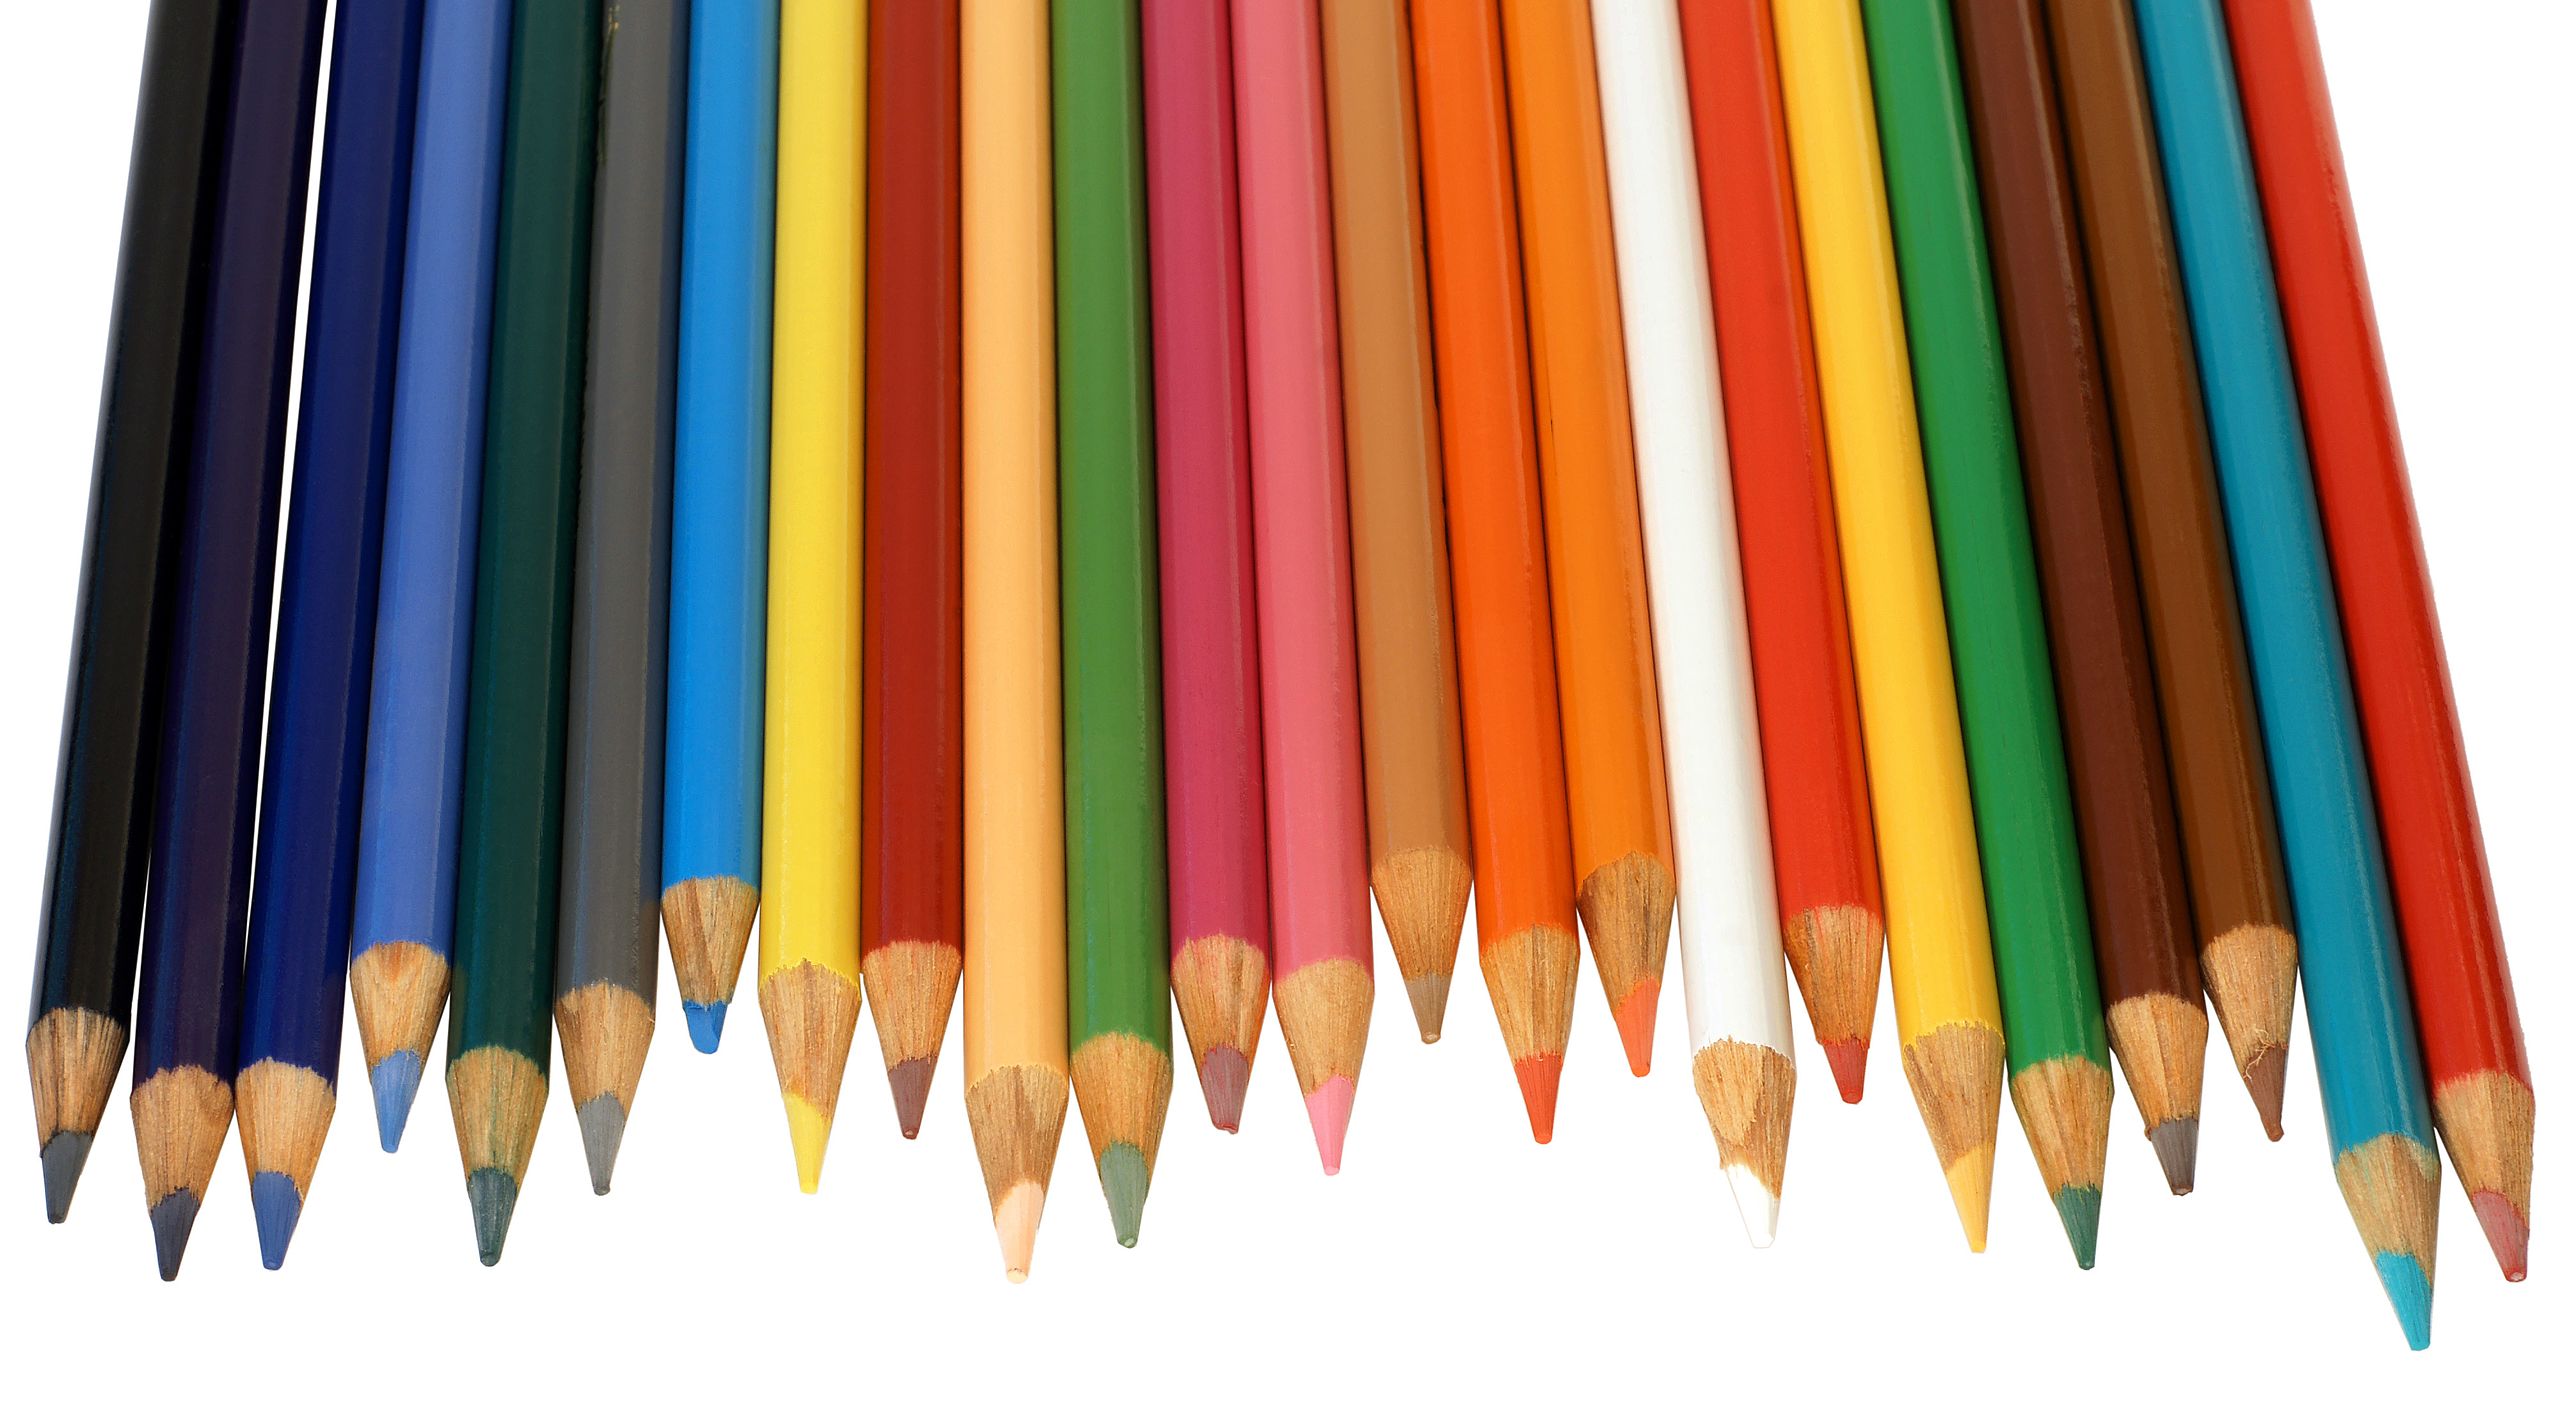 https://upload.wikimedia.org/wikipedia/commons/thumb/3/3b/Colored-Pencils.jpg/2560px-Colored-Pencils.jpg